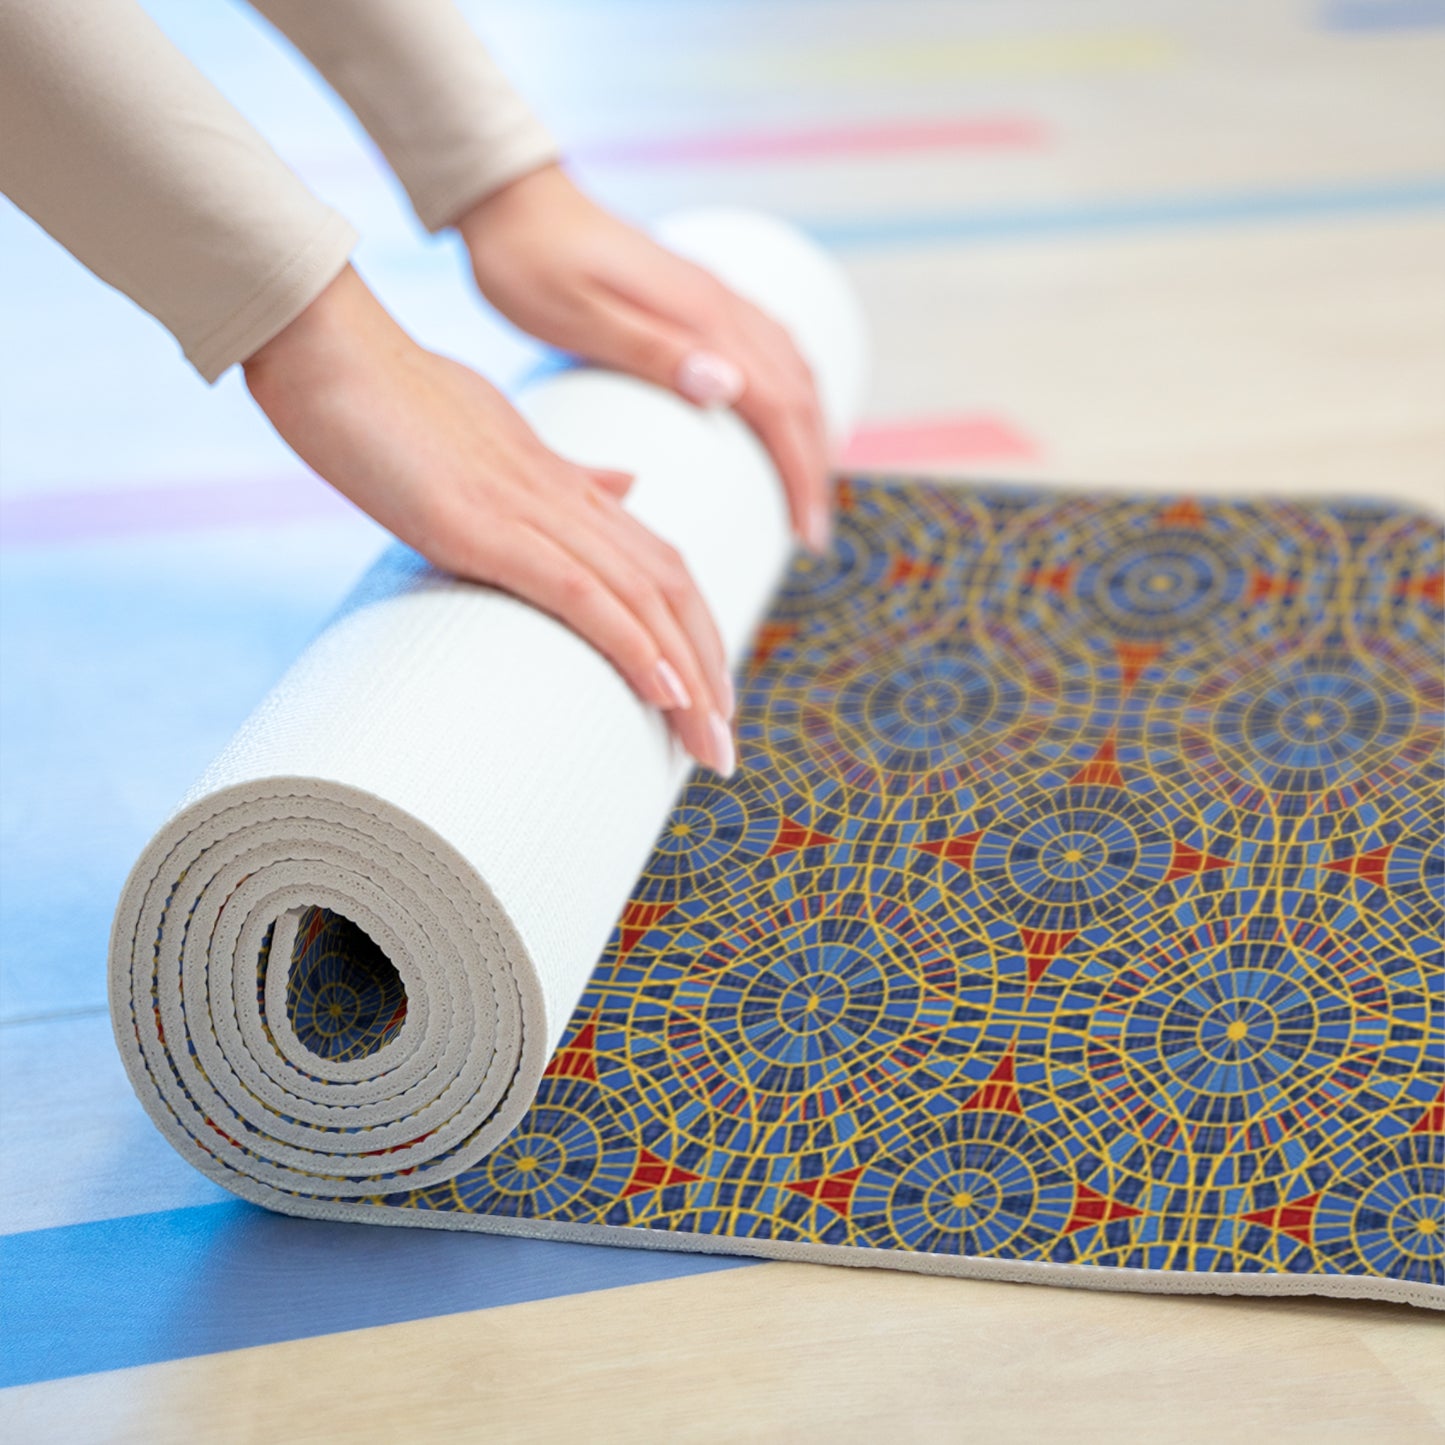 carpet cult Foam Yoga Mat, carpet cult, carpet pattern, carpet yoga mat, dragon con, marriott carpet, marriott carpet yoga, yoga mat, yoga matt, carpet cult yoga